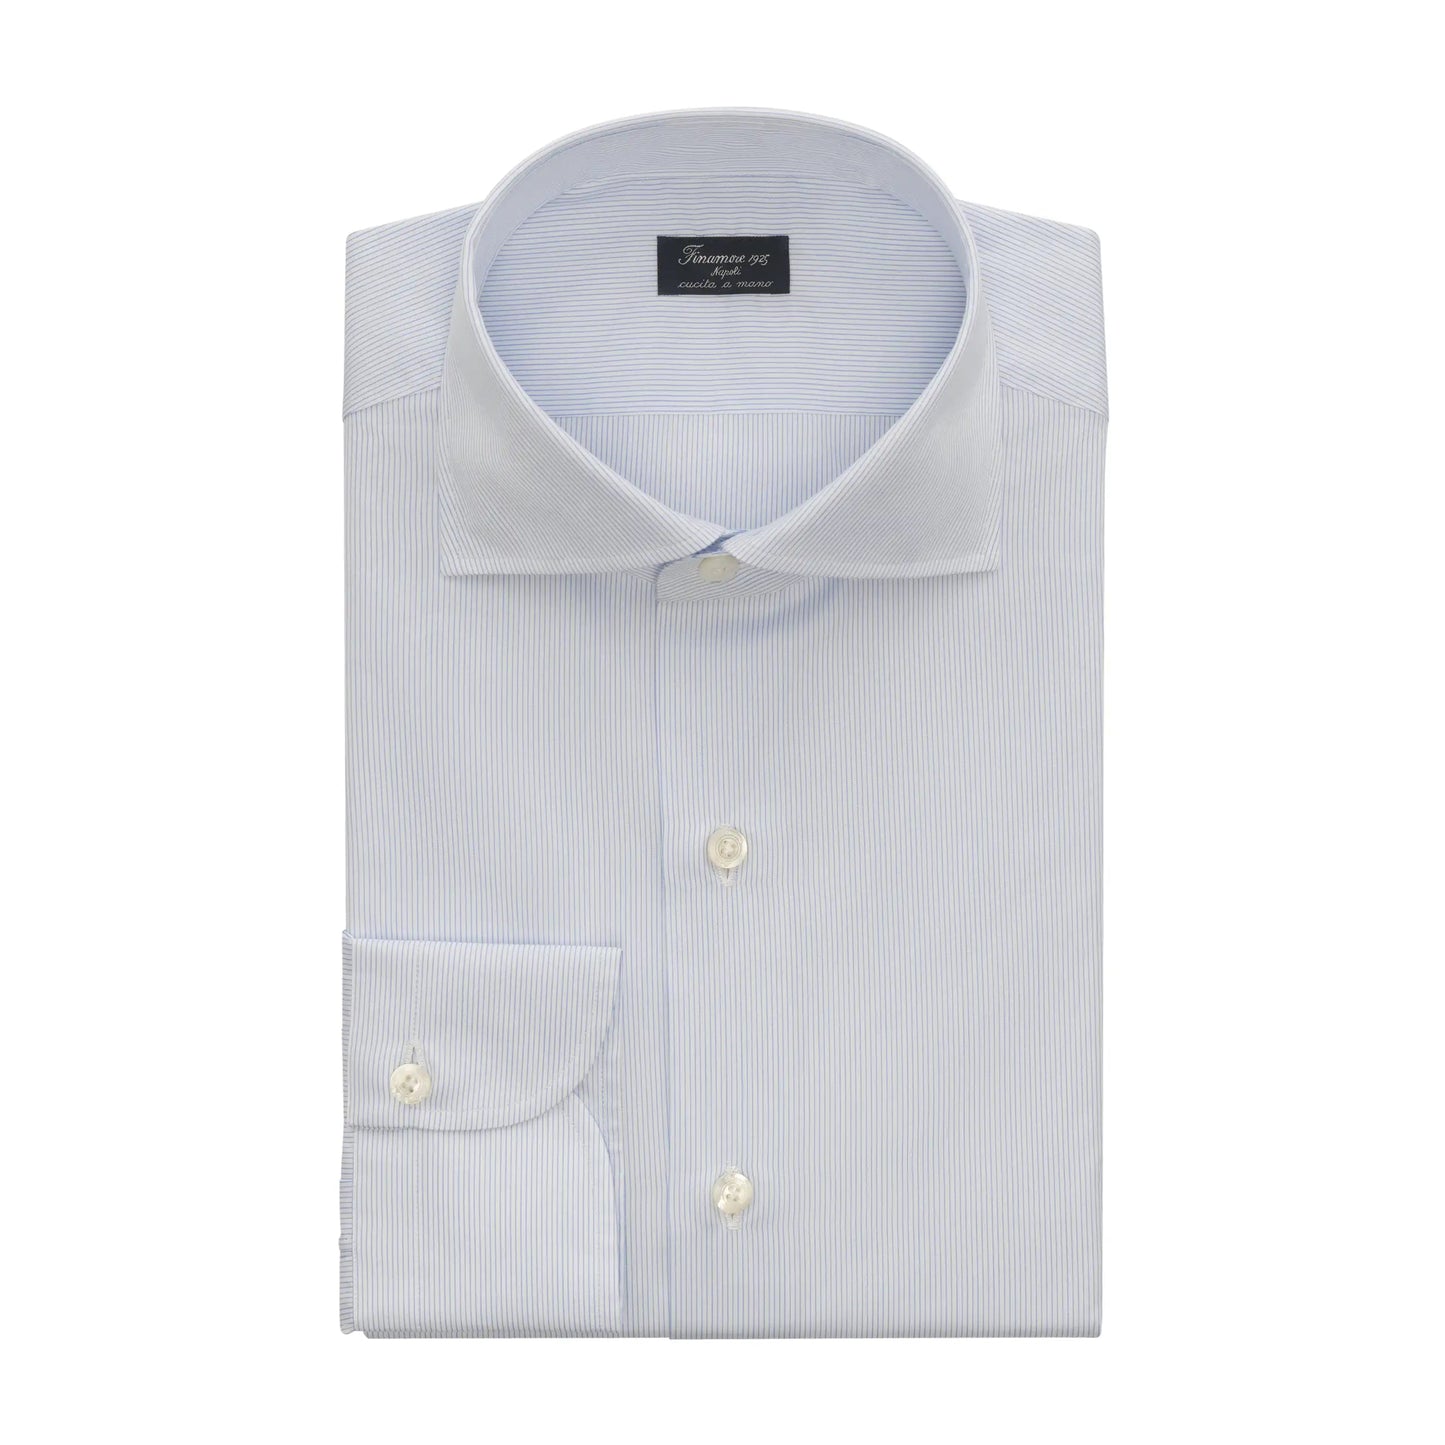 Finamore Micro-Striped Cotton Shirt in White and Blue - SARTALE